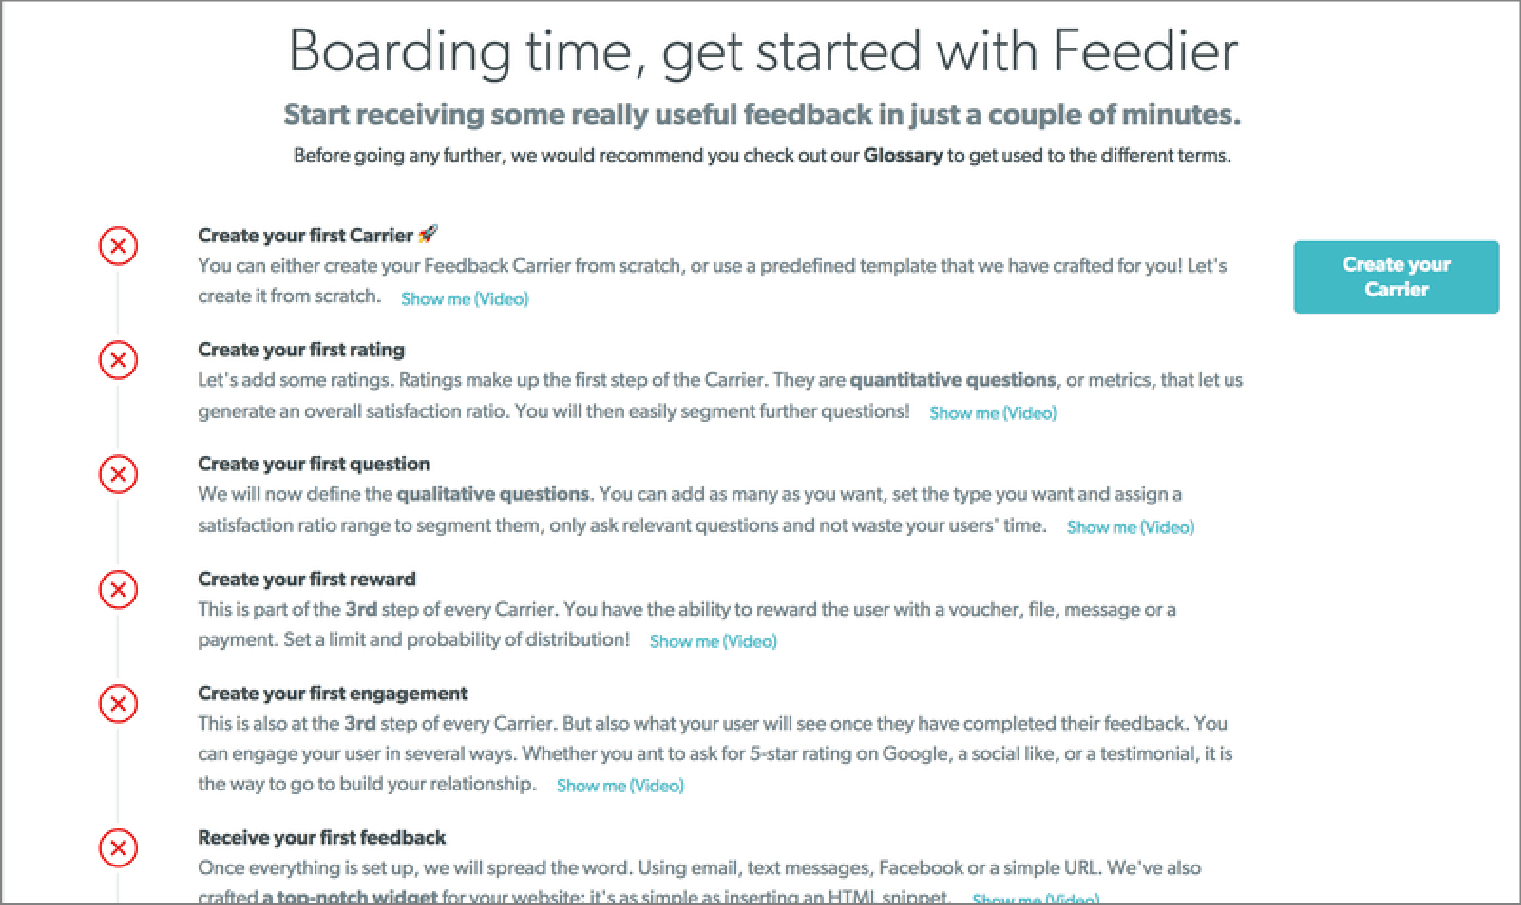  Feedier's Customer Onboarding Journey | WebEngage